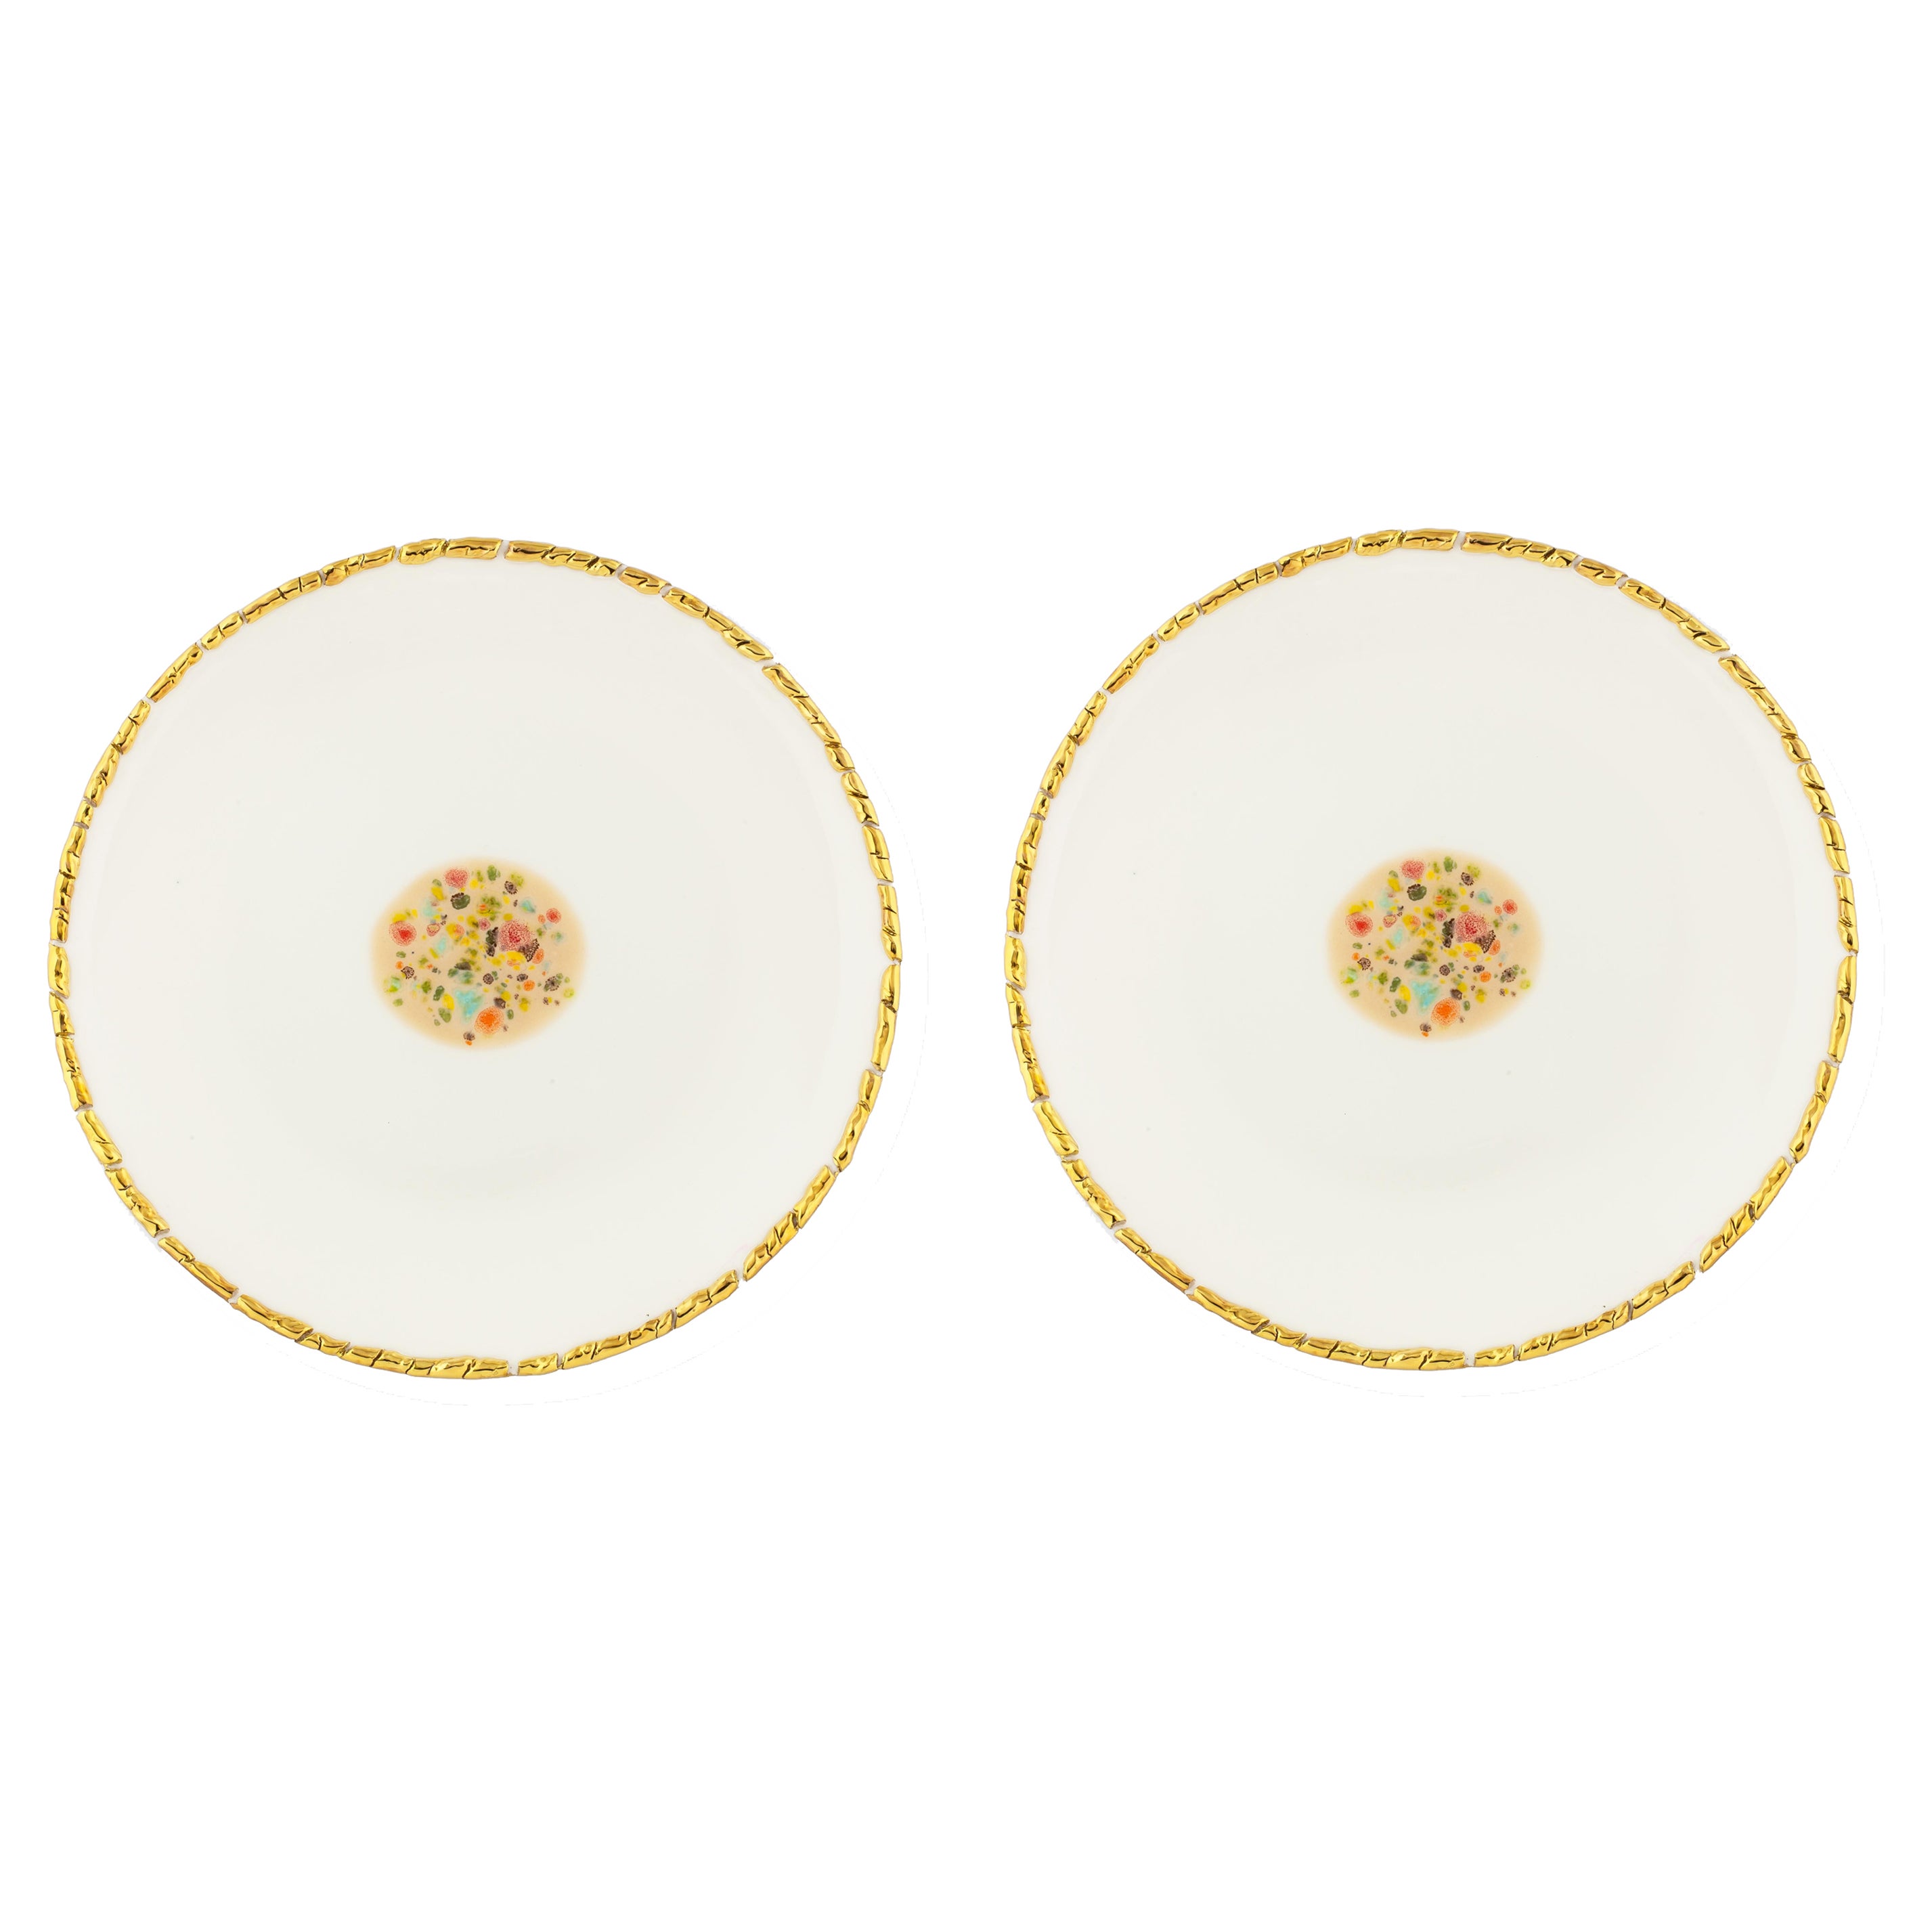 Contemporary Set of 2 Dessert Plates Gold Hand Painted Porcelain 